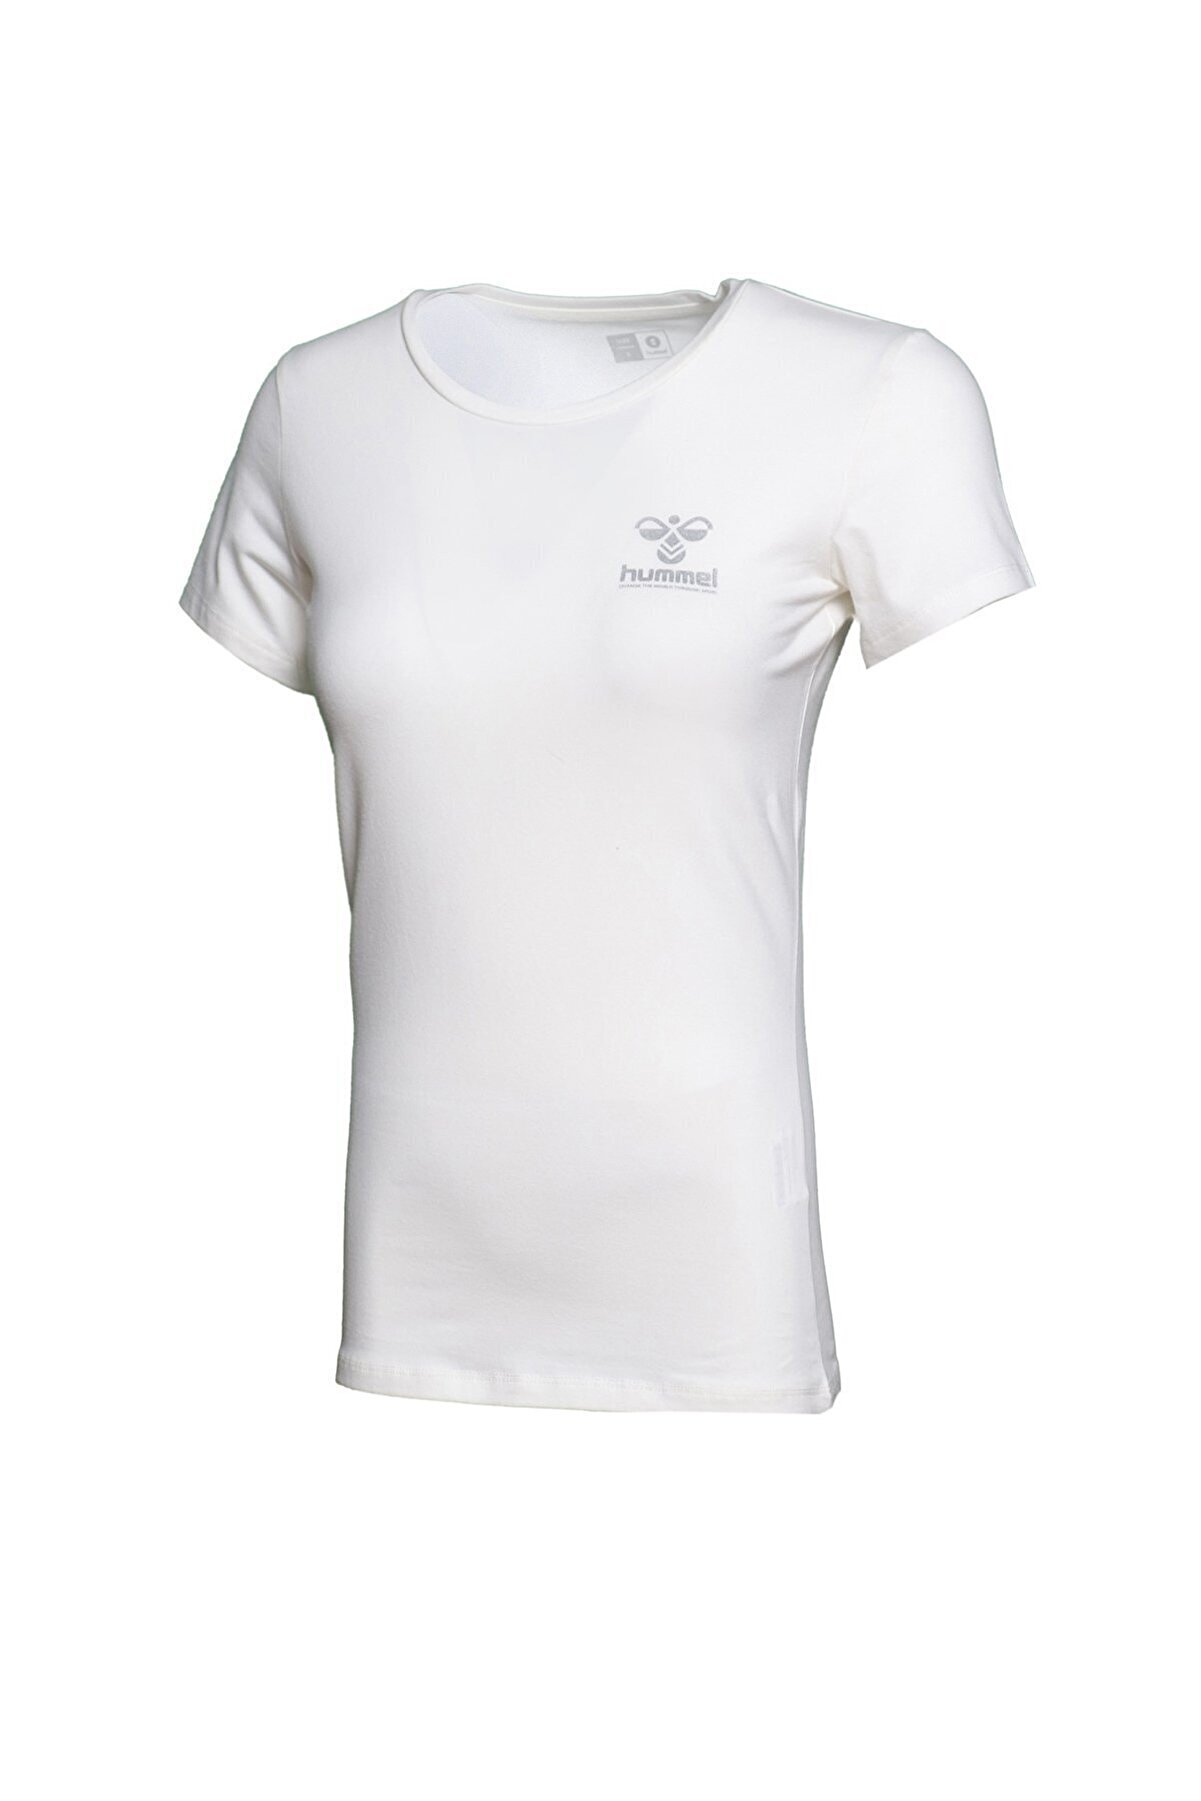 HUMMEL Kadın Deni Beyaz T-shirt 911306-9003